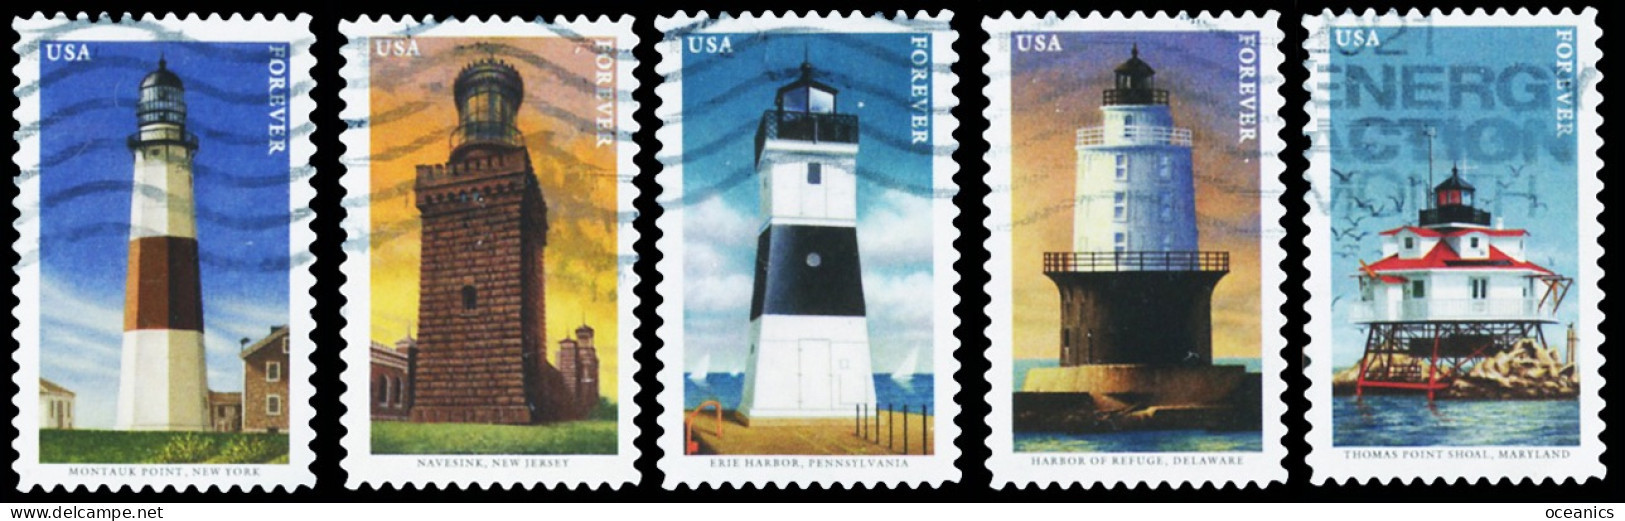 Etats-Unis / United States (Scott No.5621-25 - Mid-Atlantic Lighthouses) (o) Set Of 5 - Usados